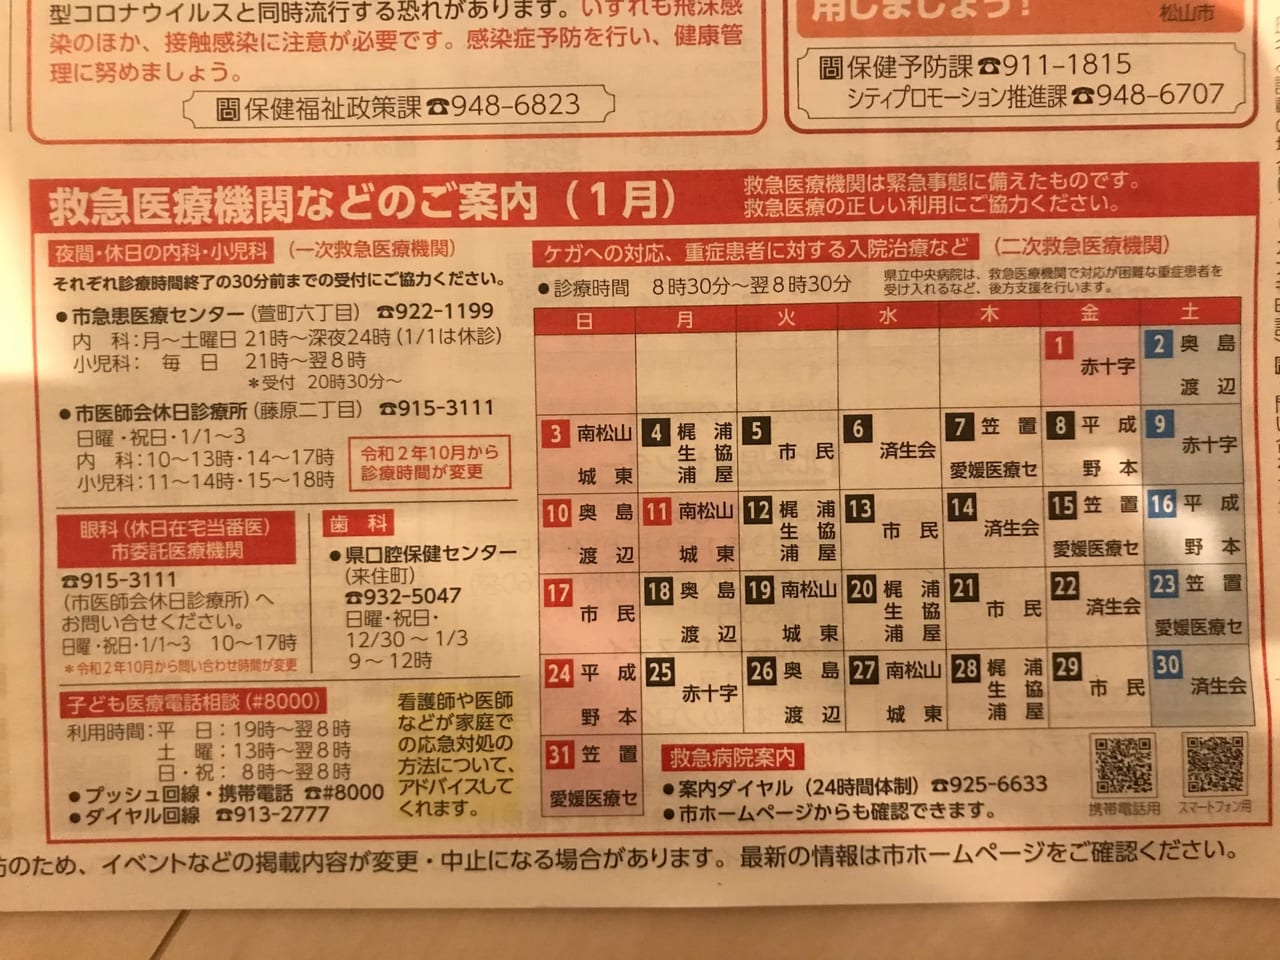 松山市の休日診療2020-2021